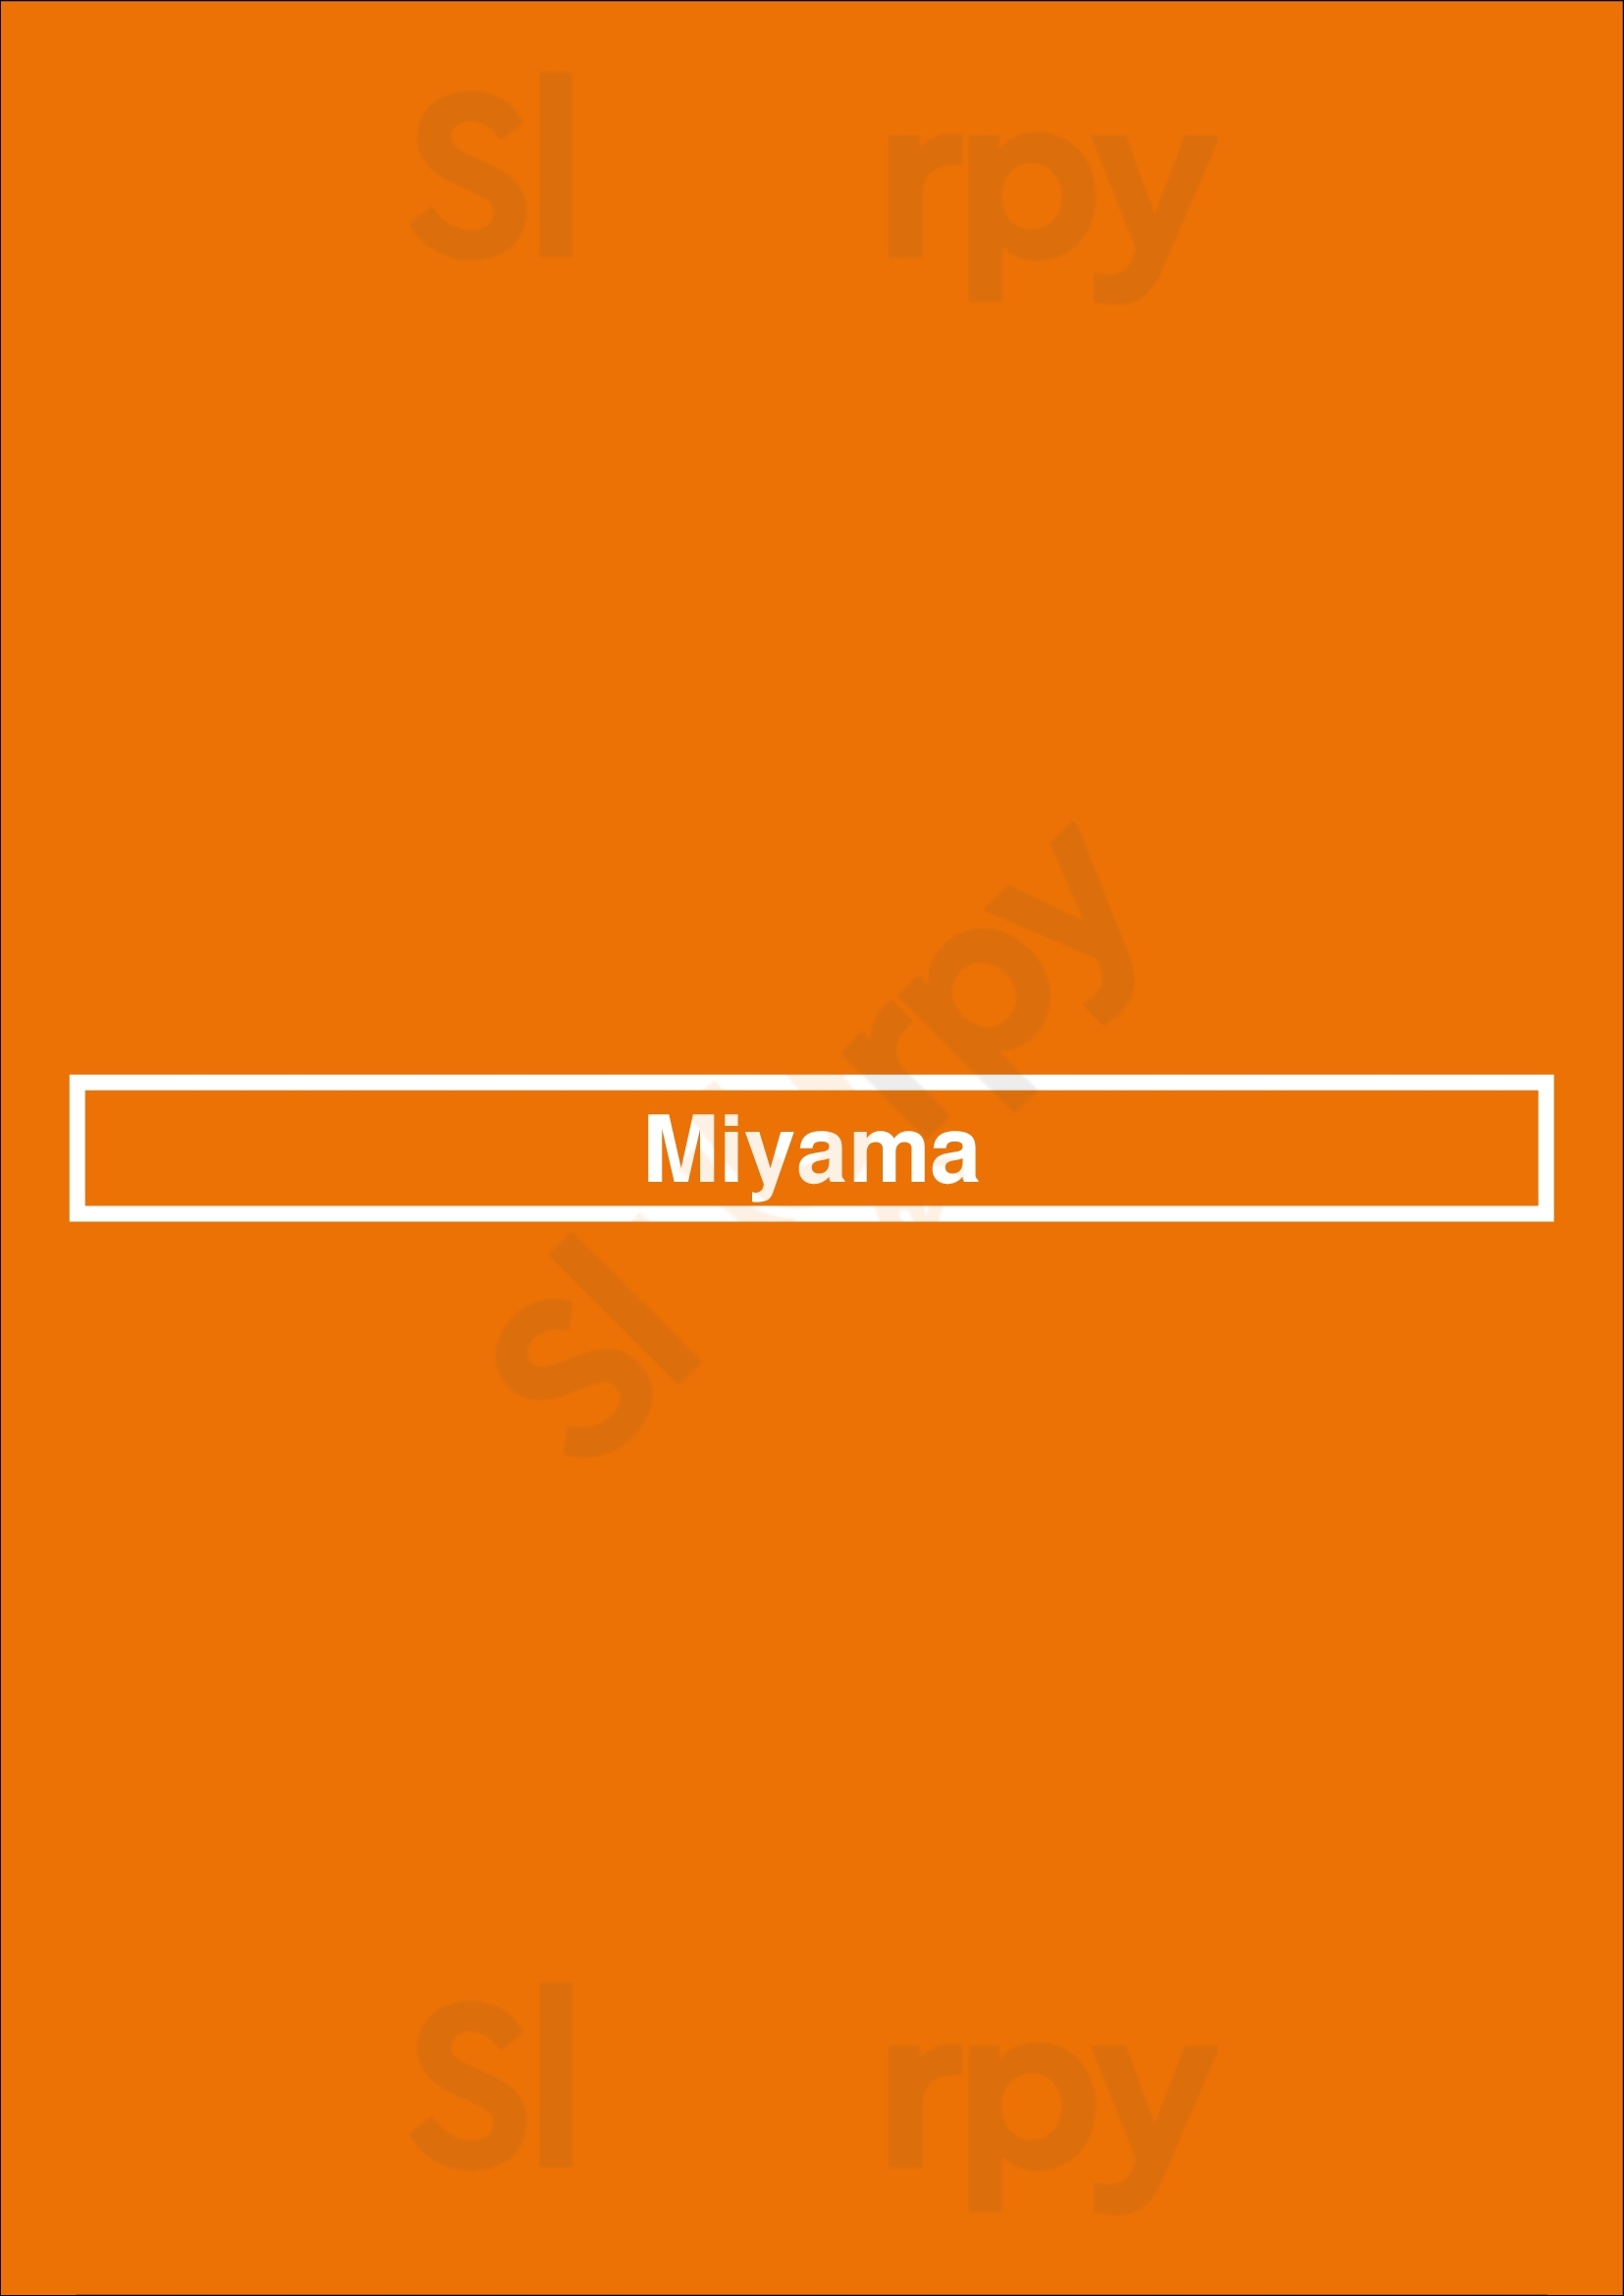 Miyama Madrid Menu - 1